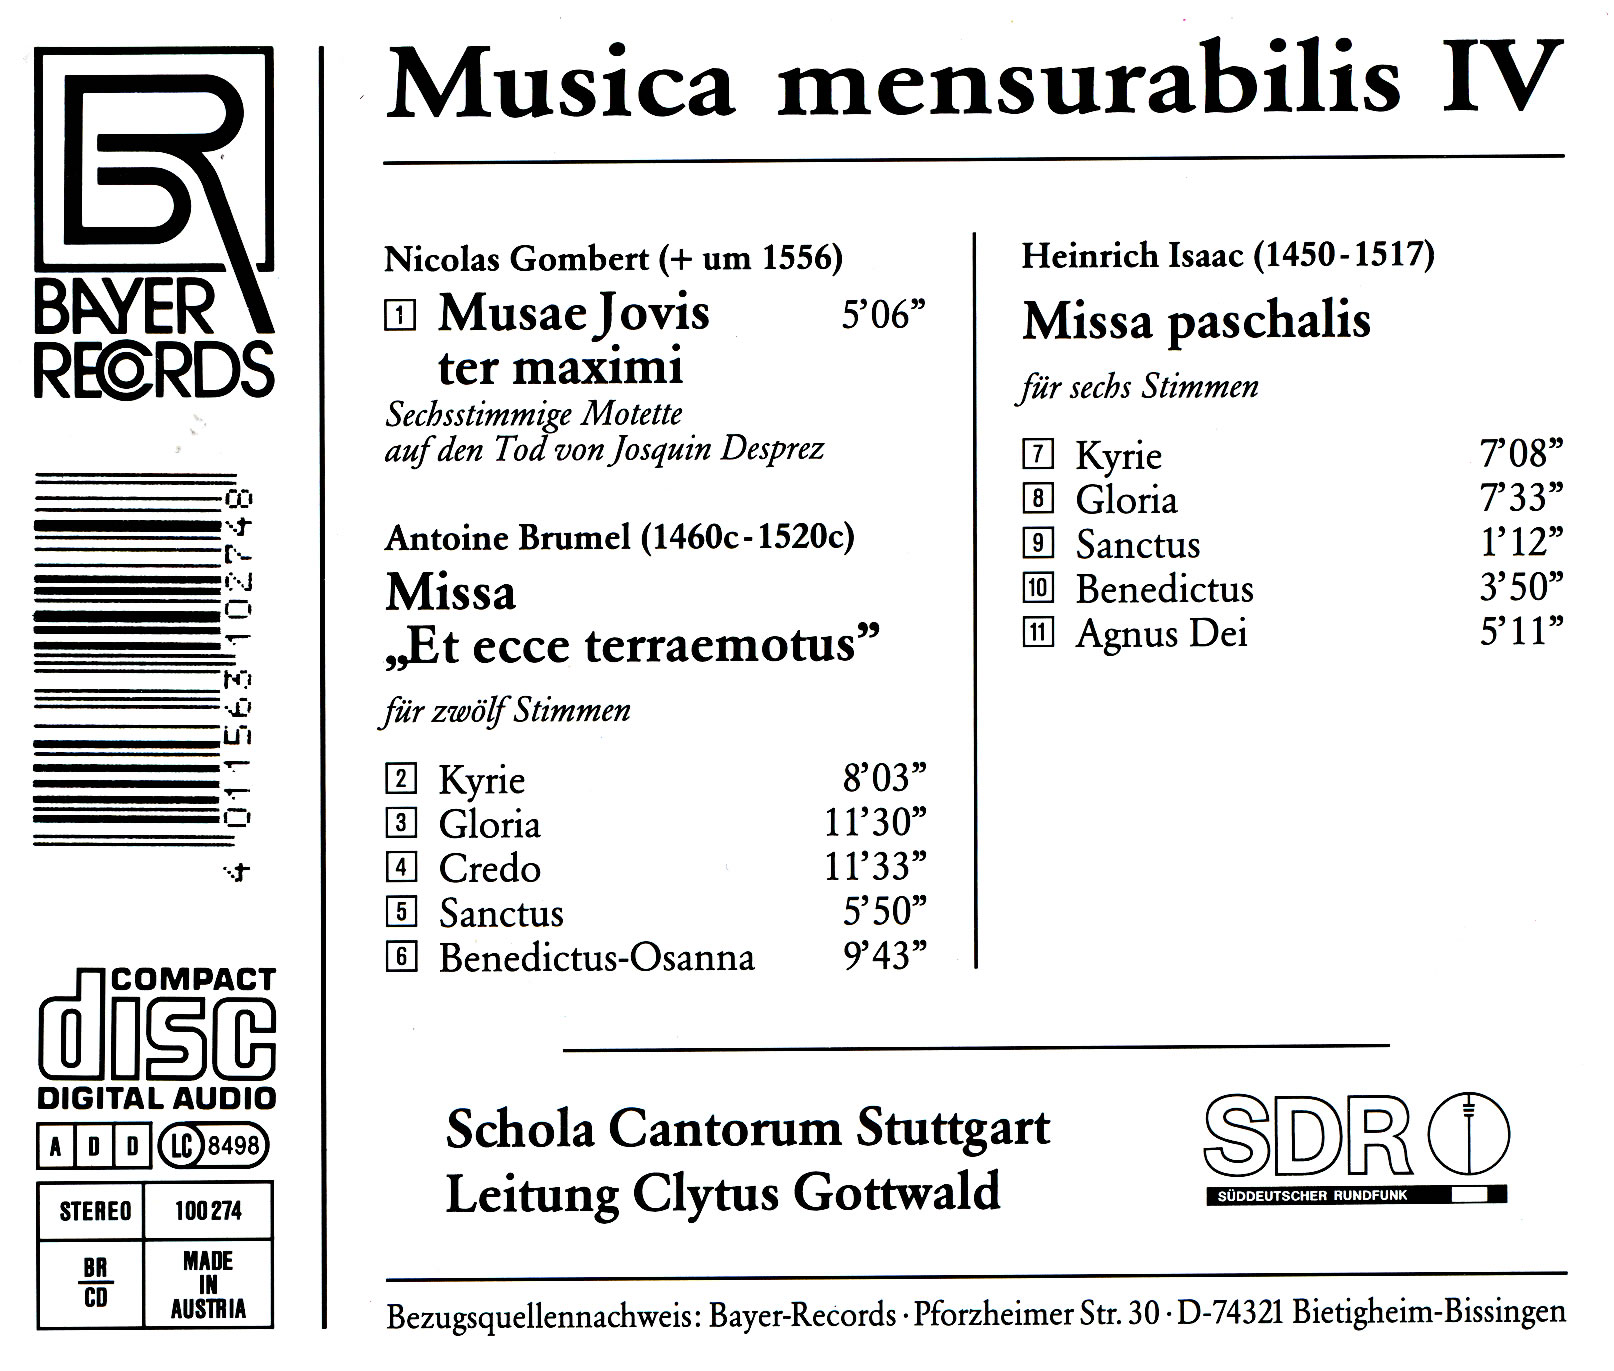 Musica mensurabilis IV